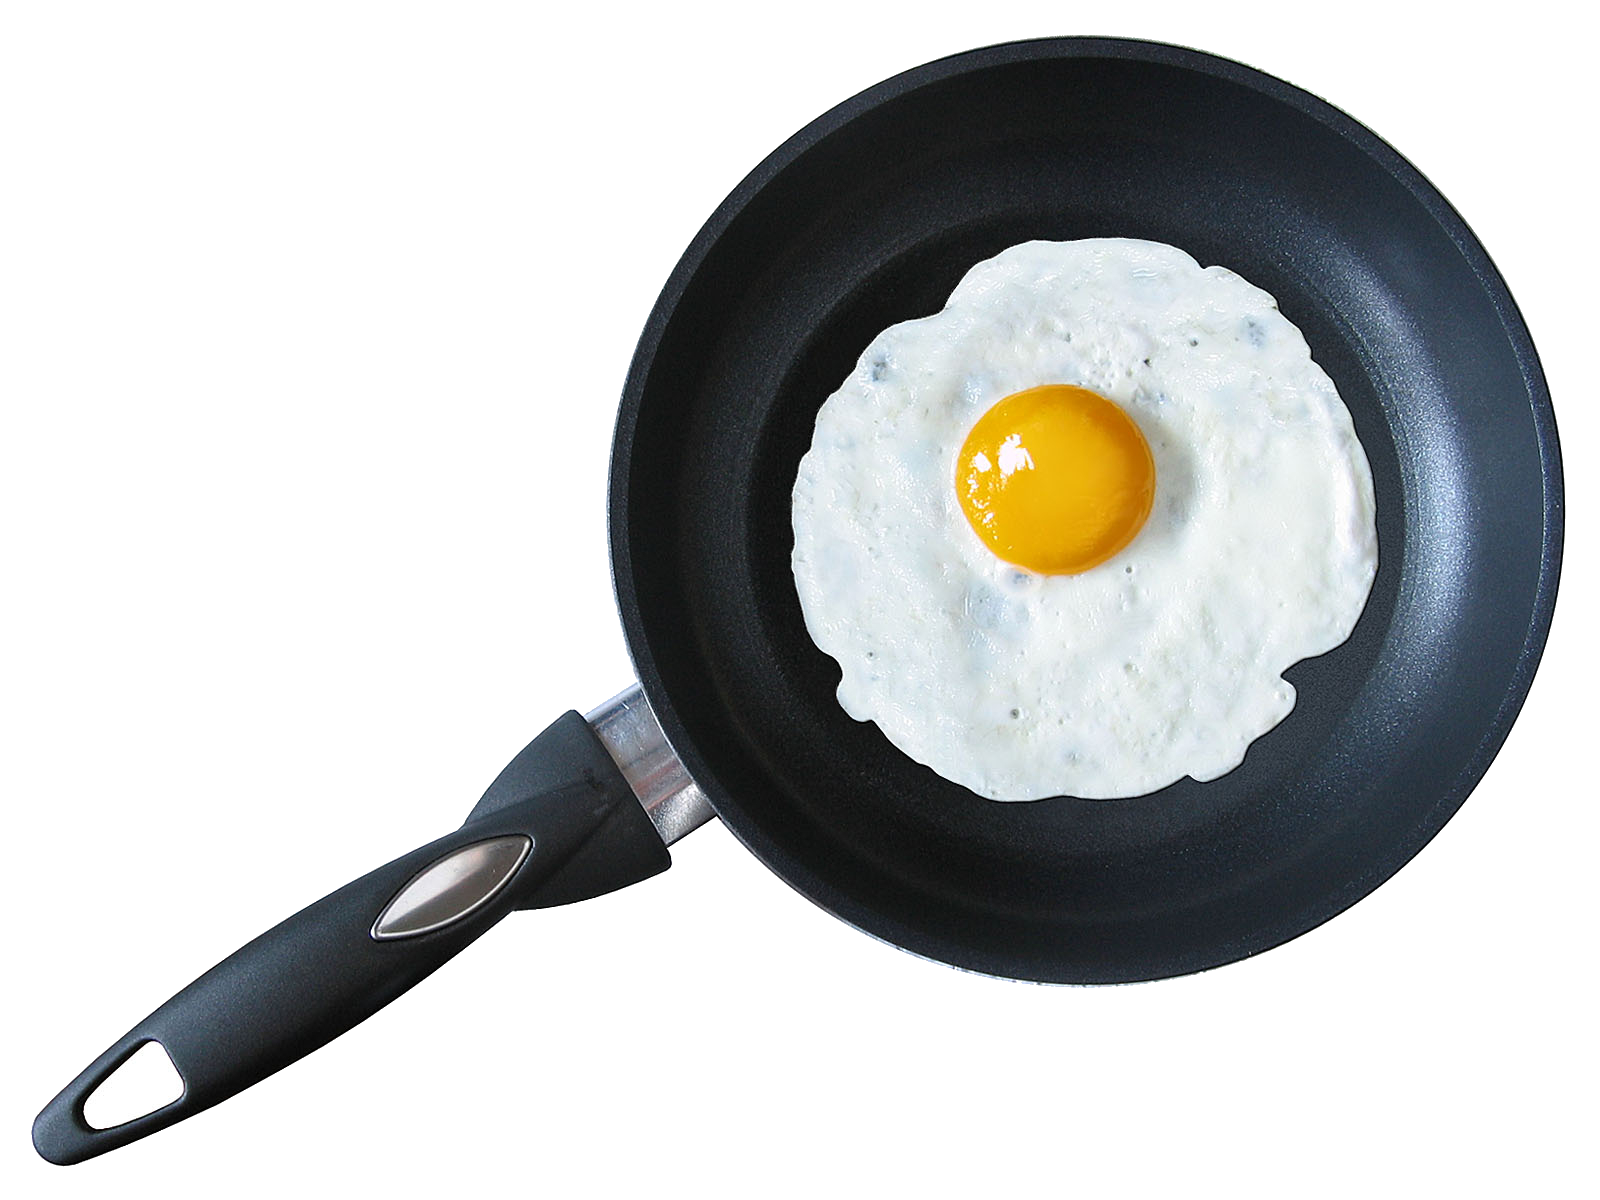 Fried Egg in Pan